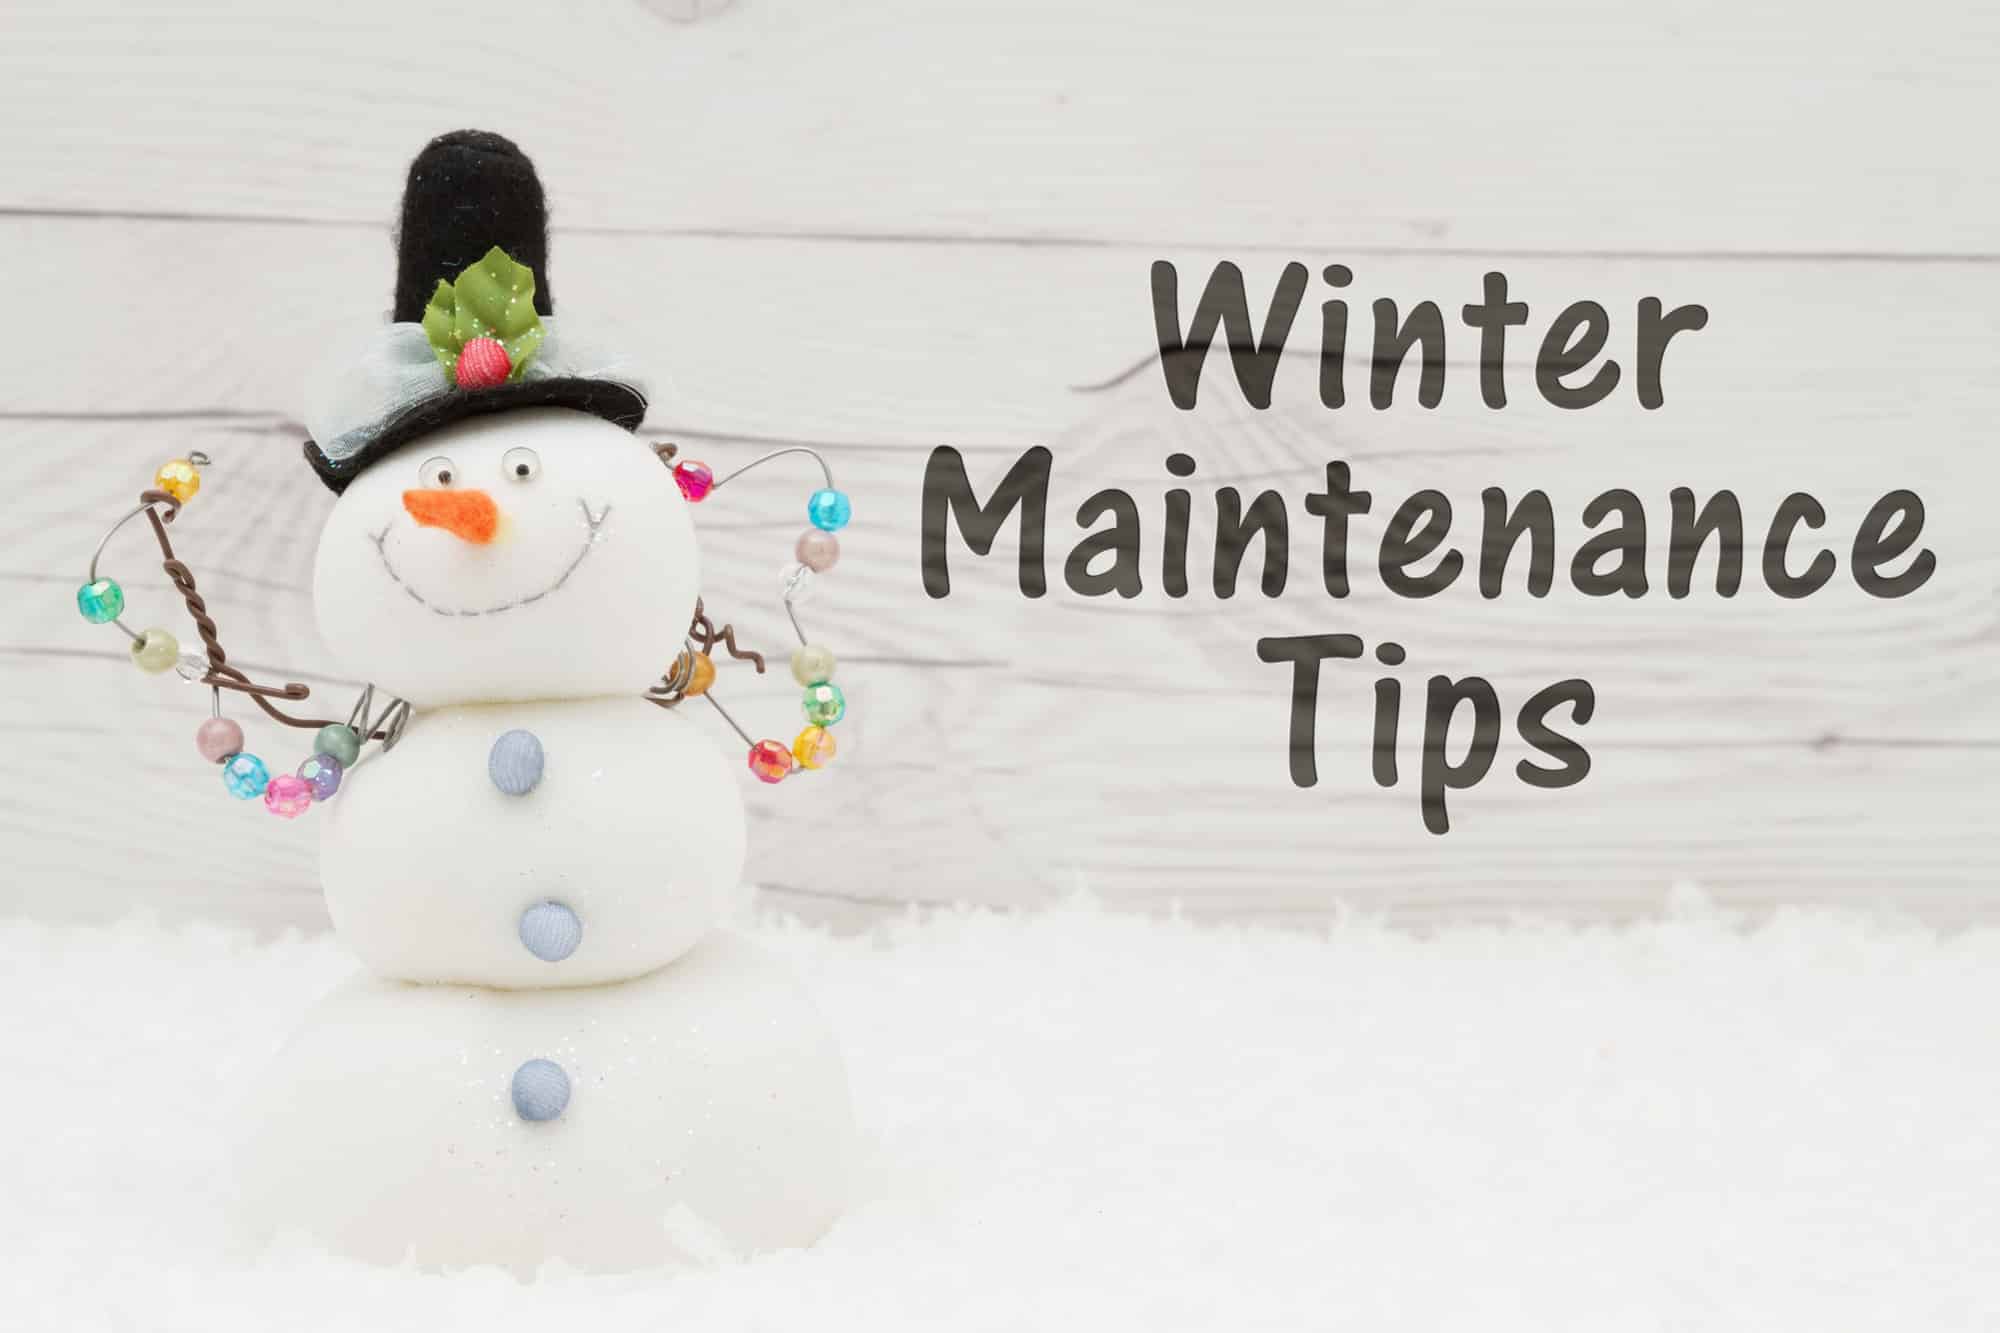 Maintenance Tips for Winter